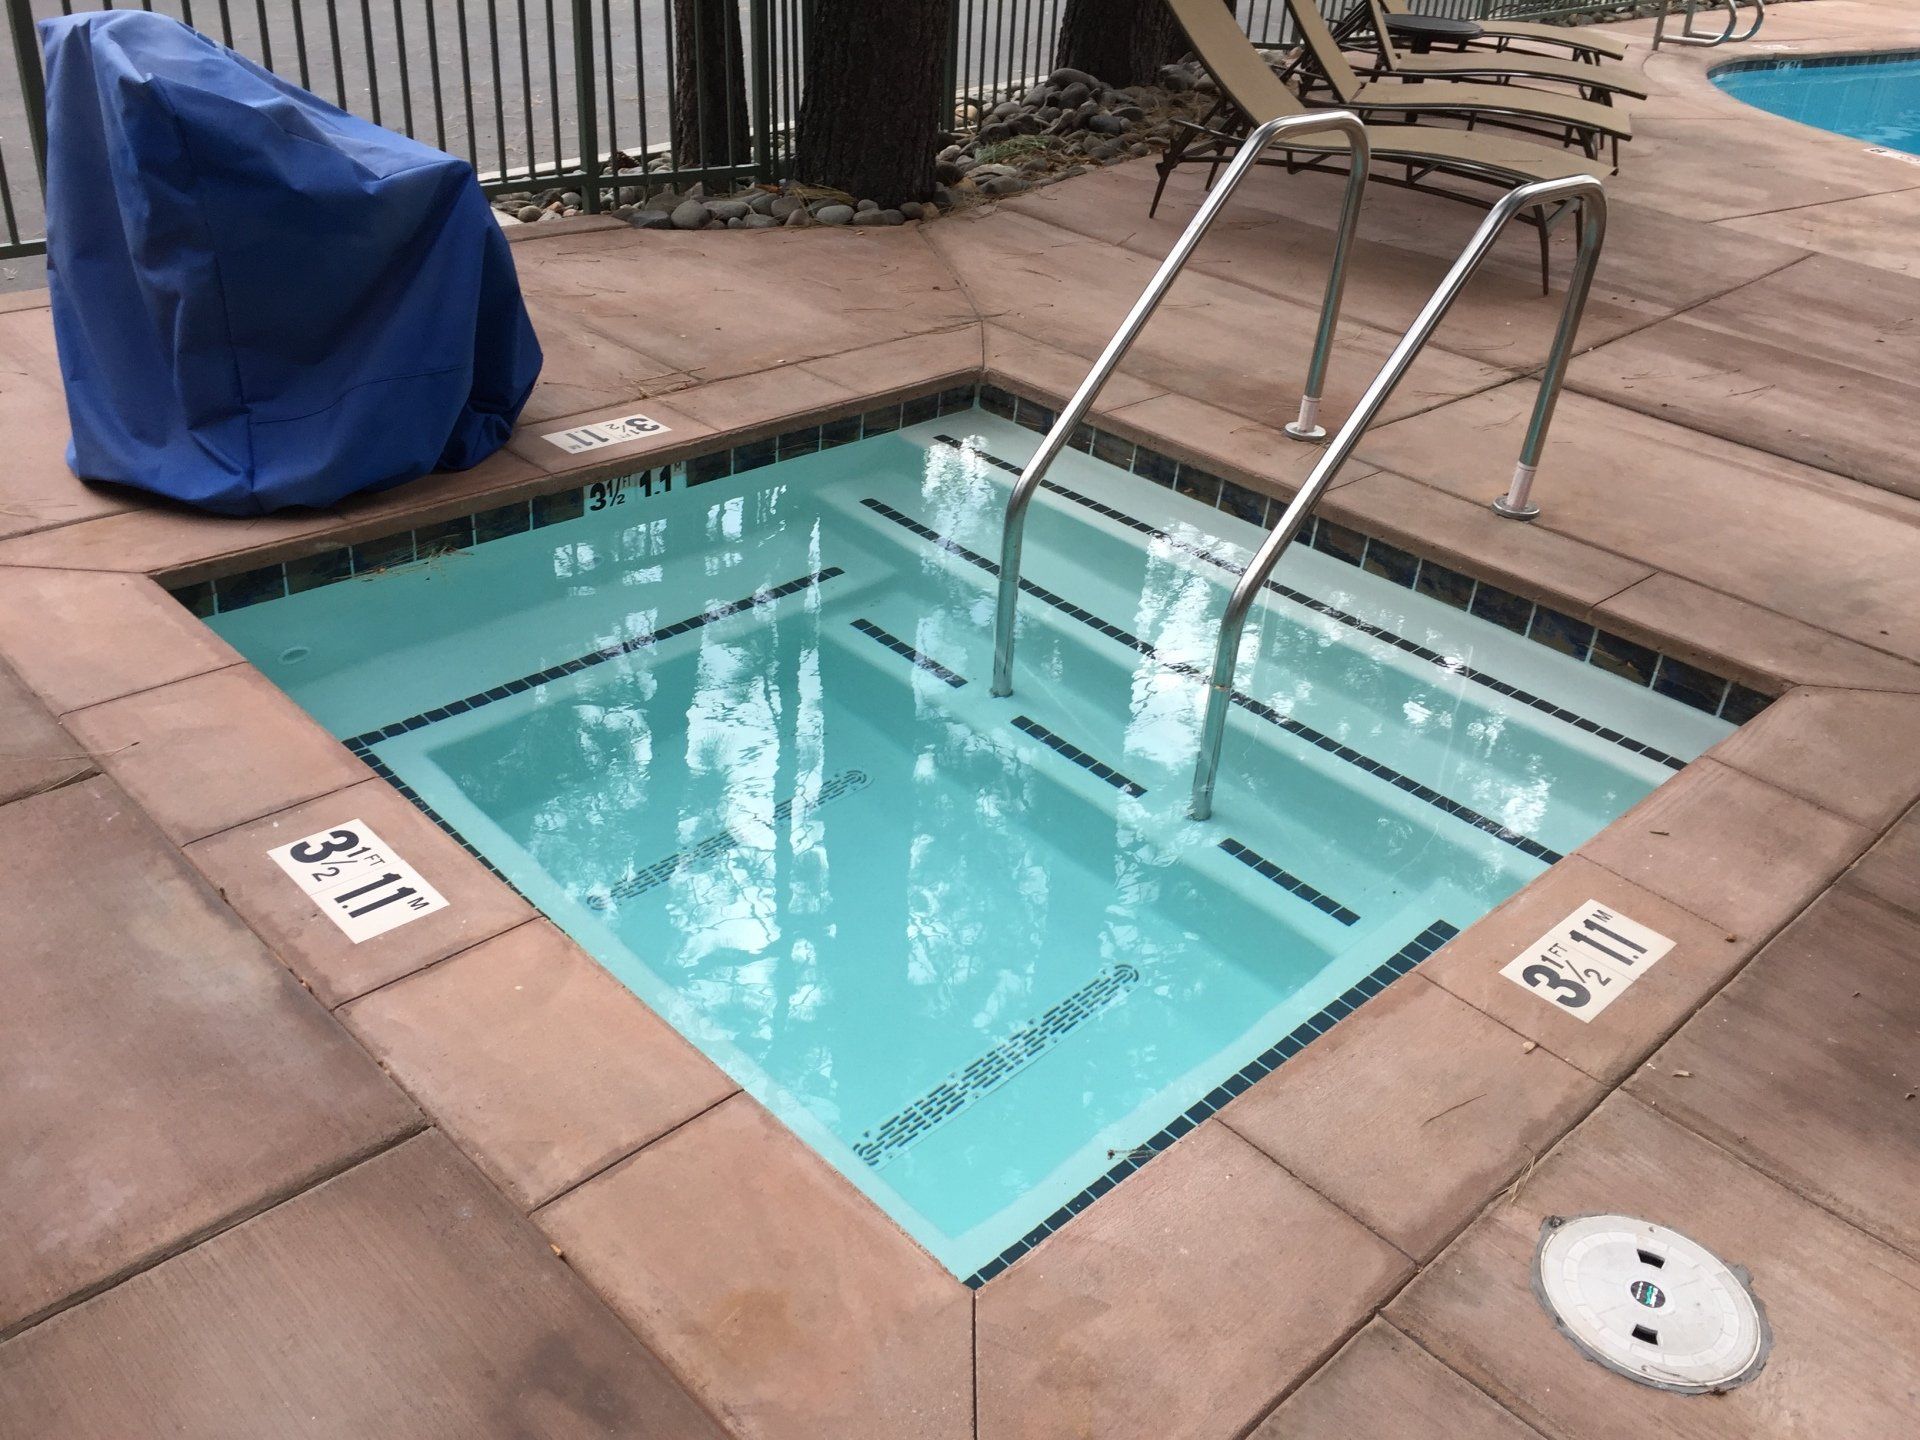 Pools — Pool Cleaning Tools in South Lake Tahoe, CA